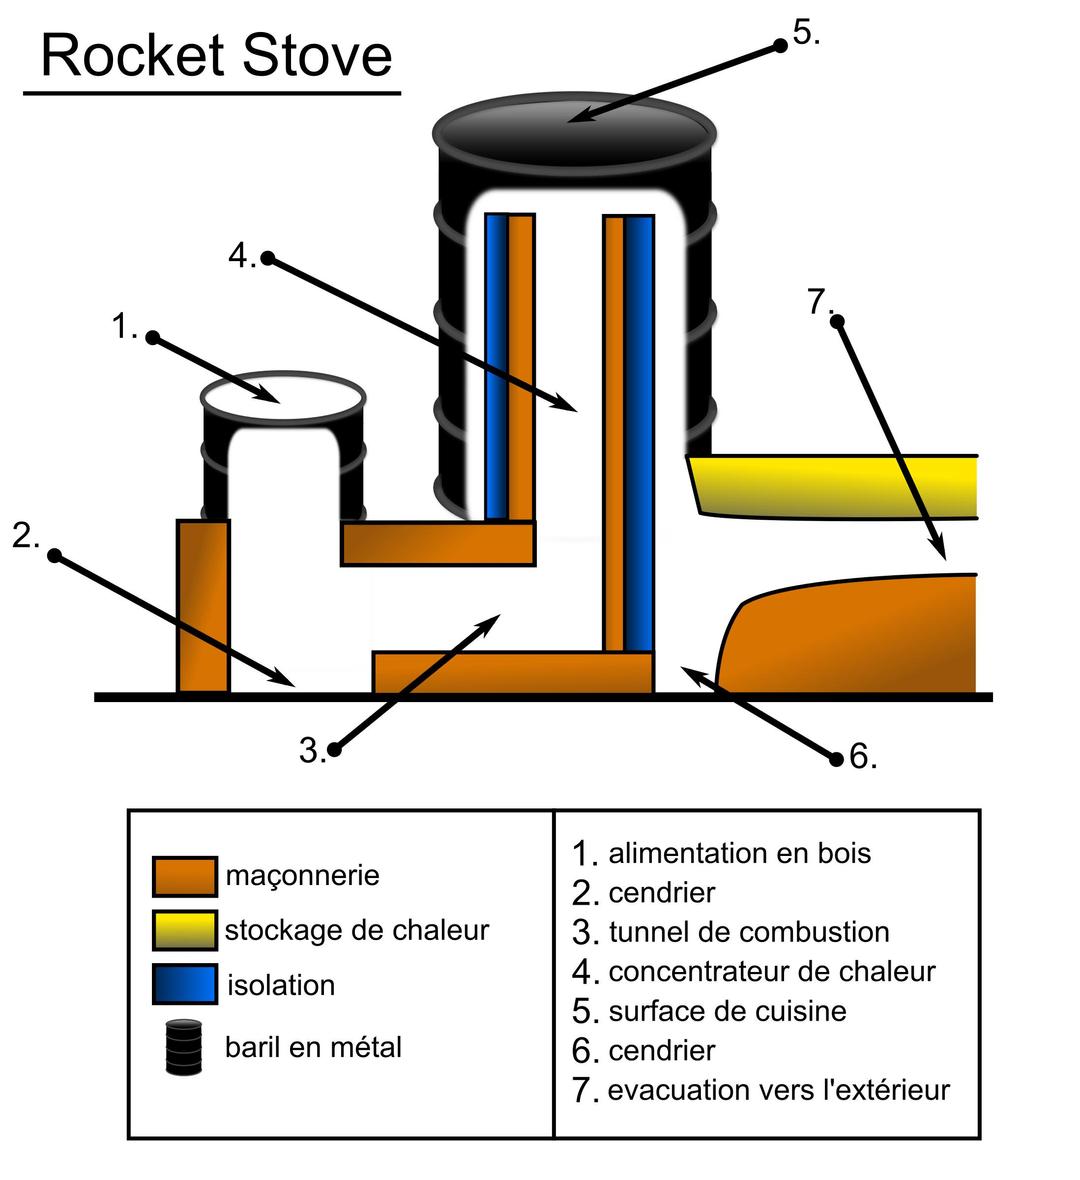 Rocket Stove schema png transparent